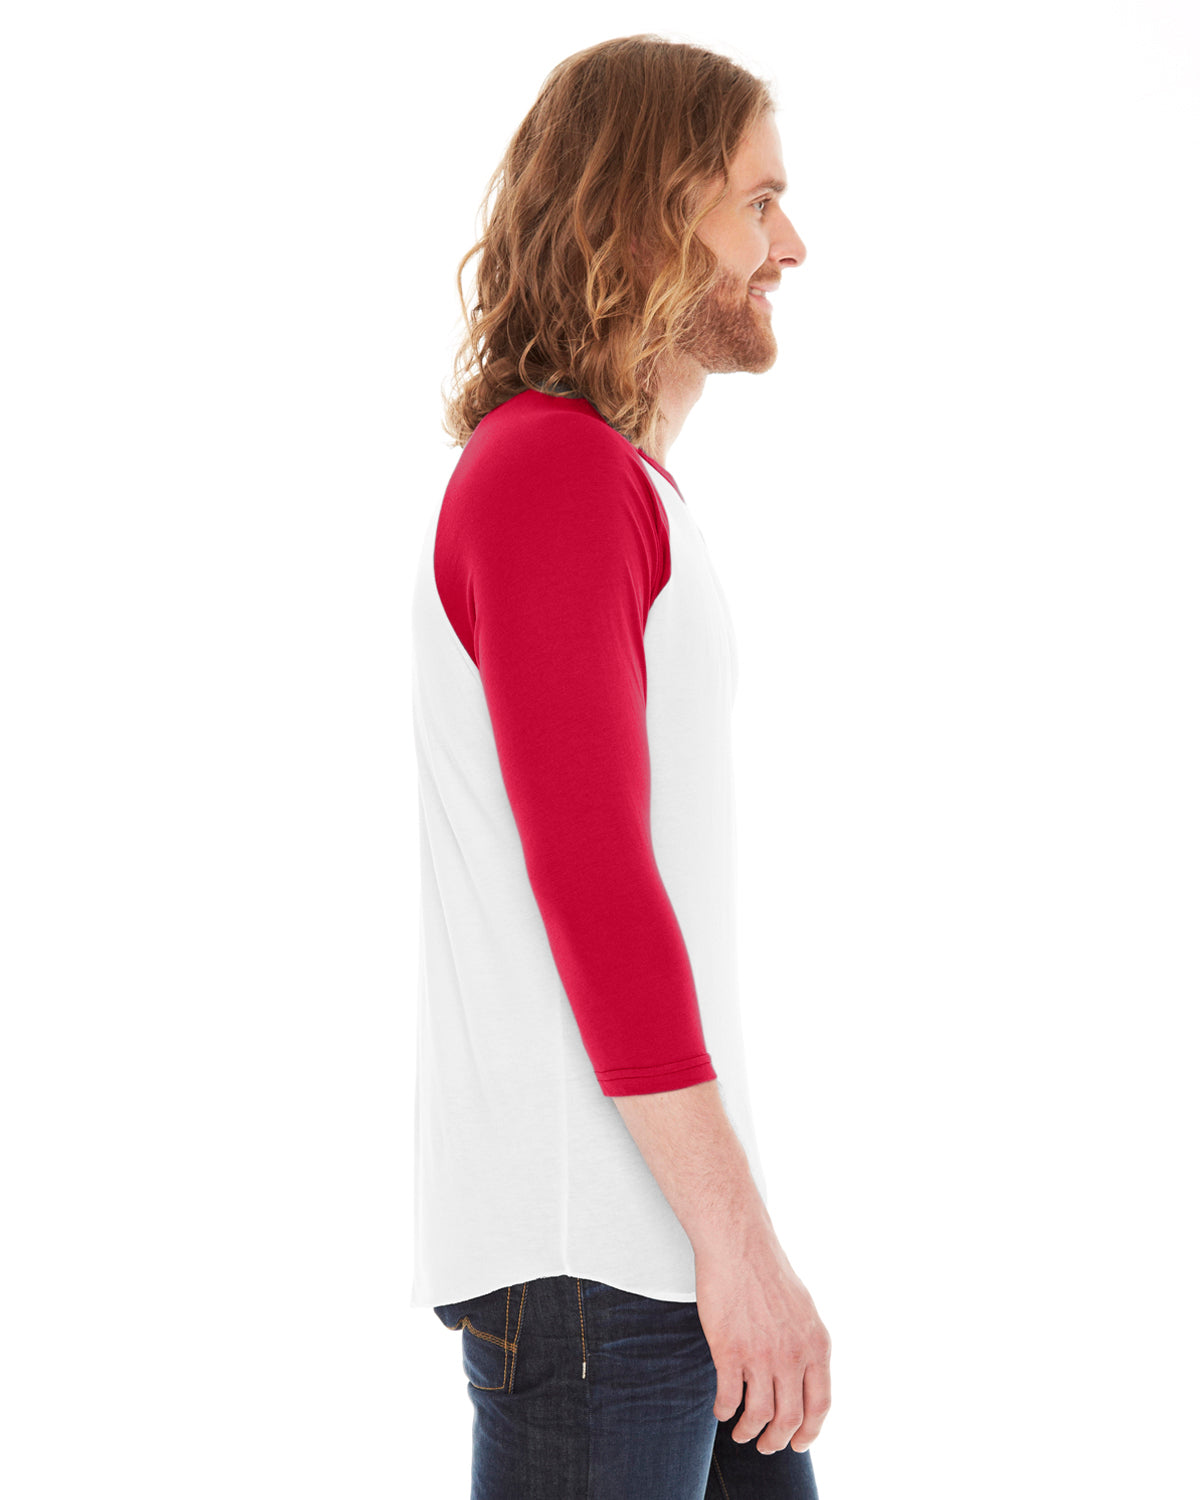 BB453 – American Apparel 3/4-Sleeve Raglan T-Shirt